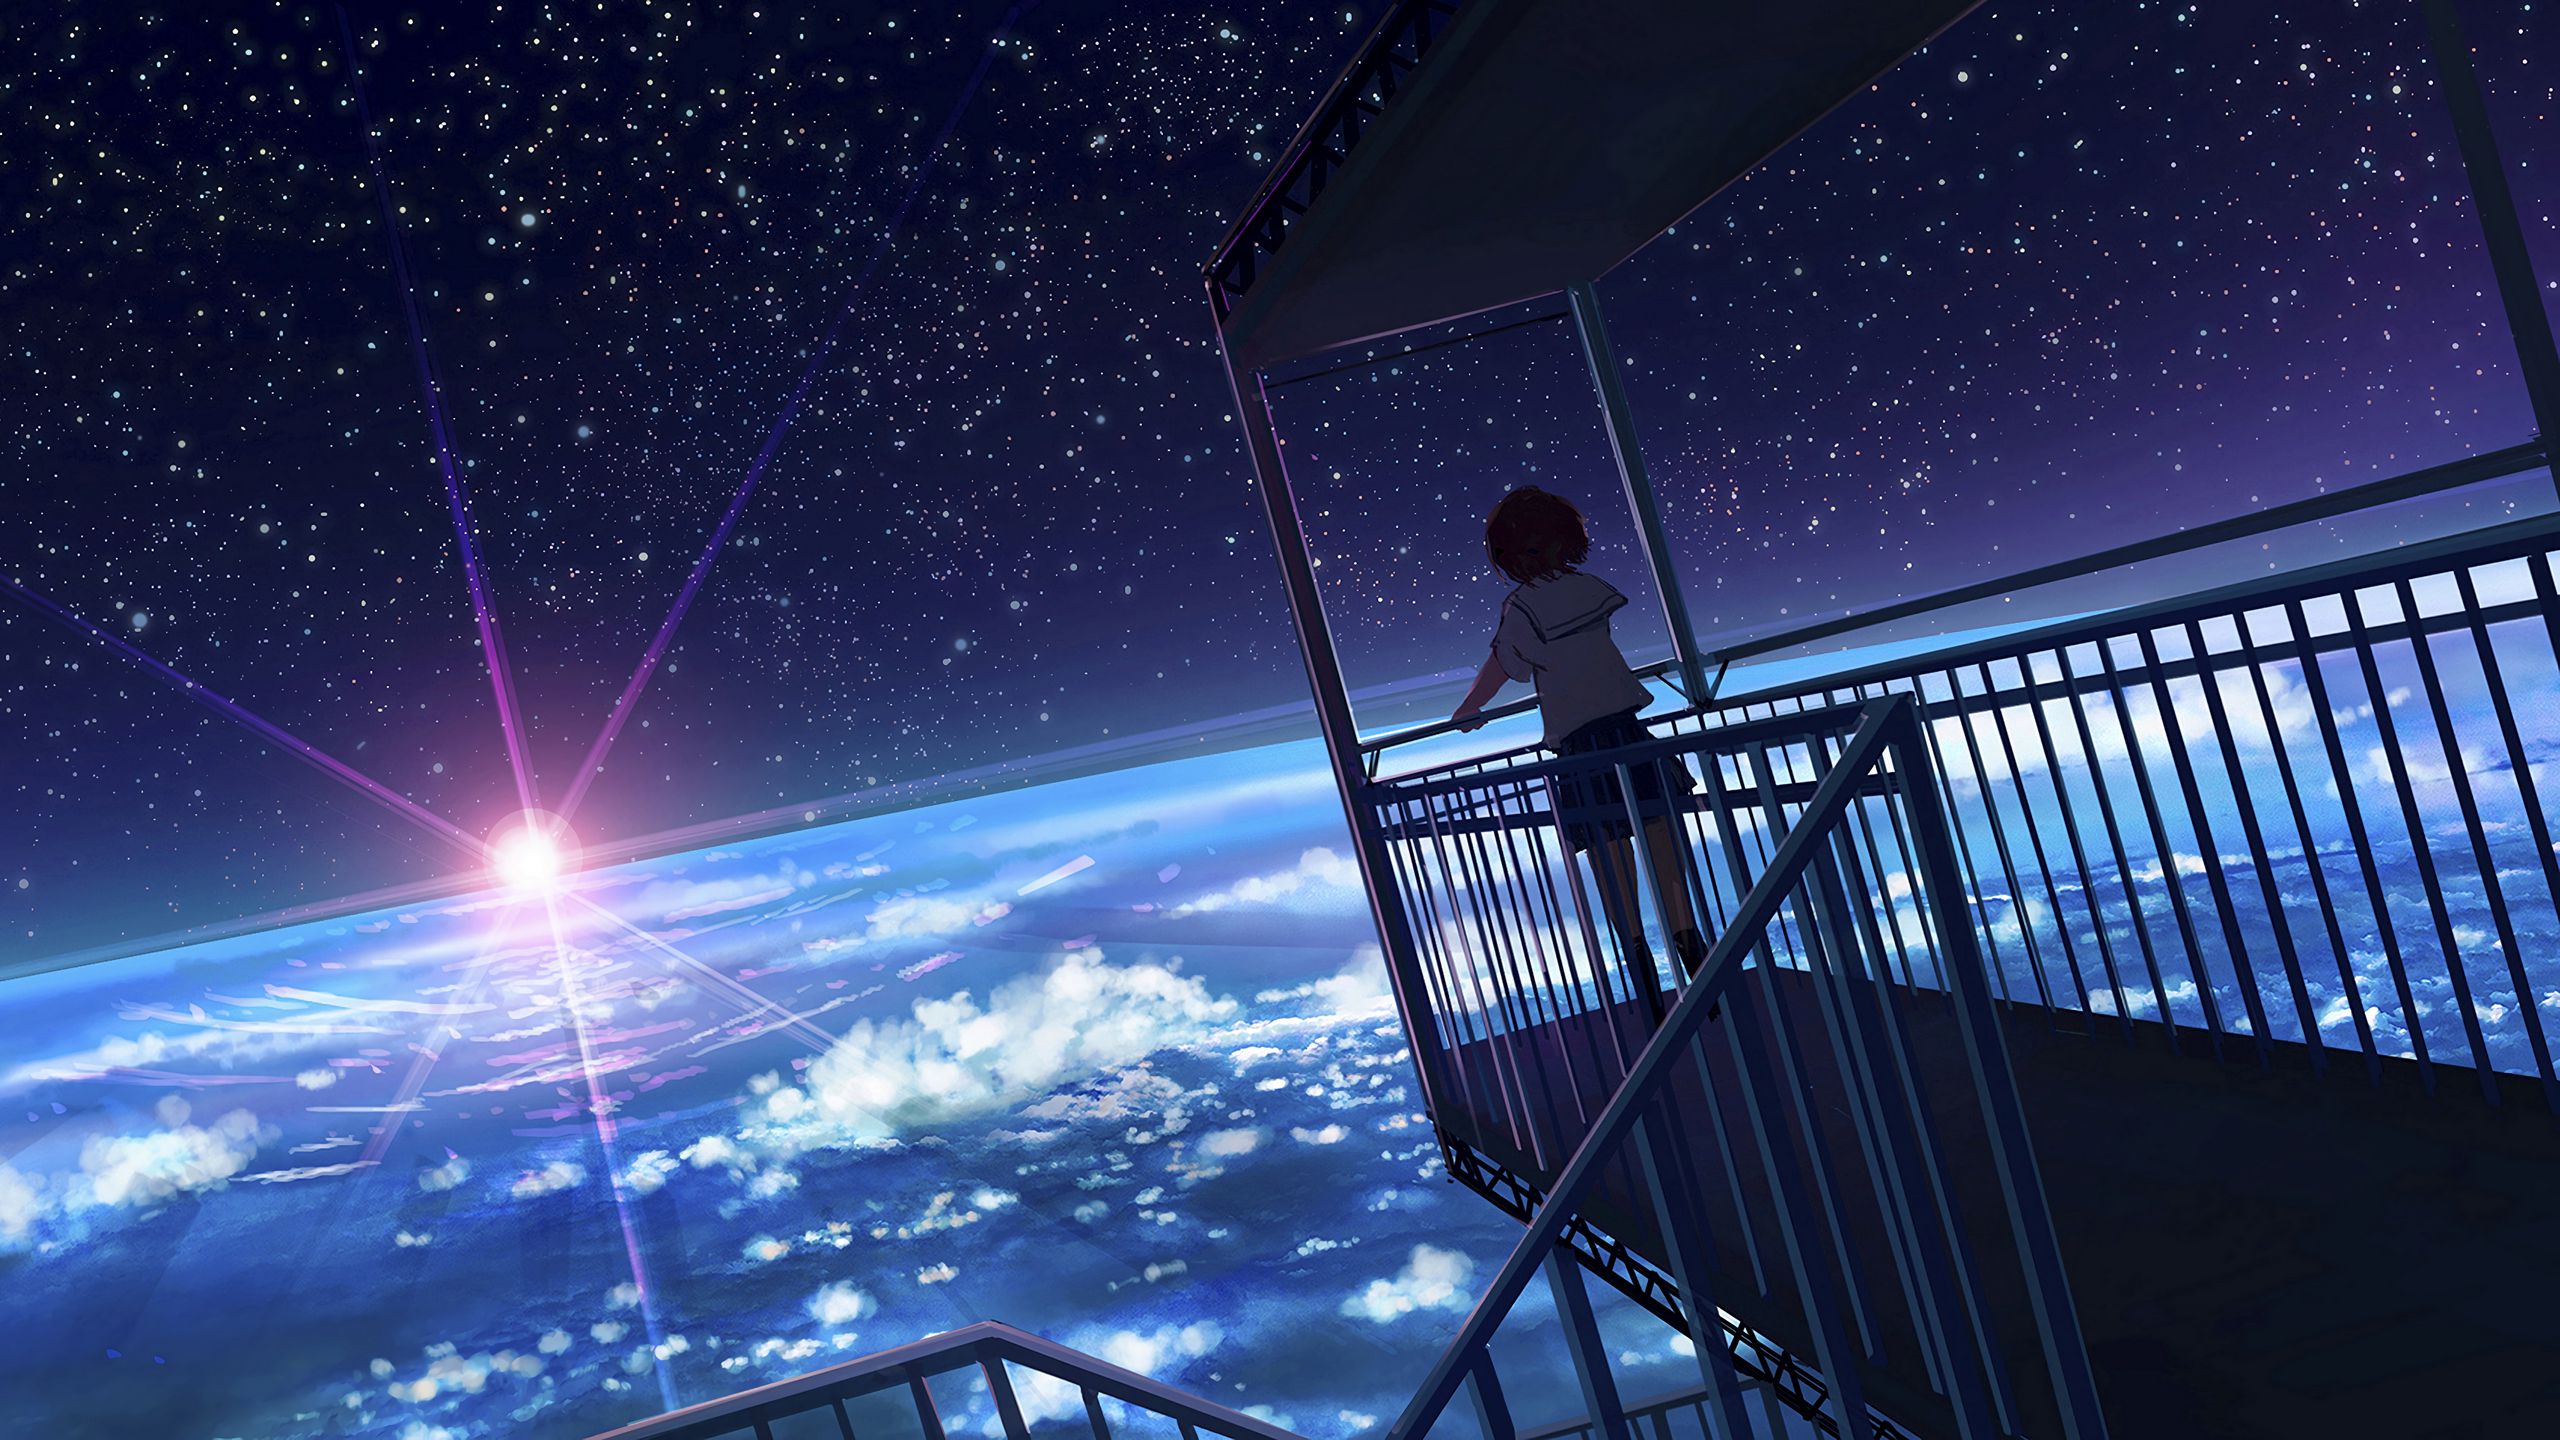 HD wallpaper anime couple scenic stars night sky silhouette water   Wallpaper Flare